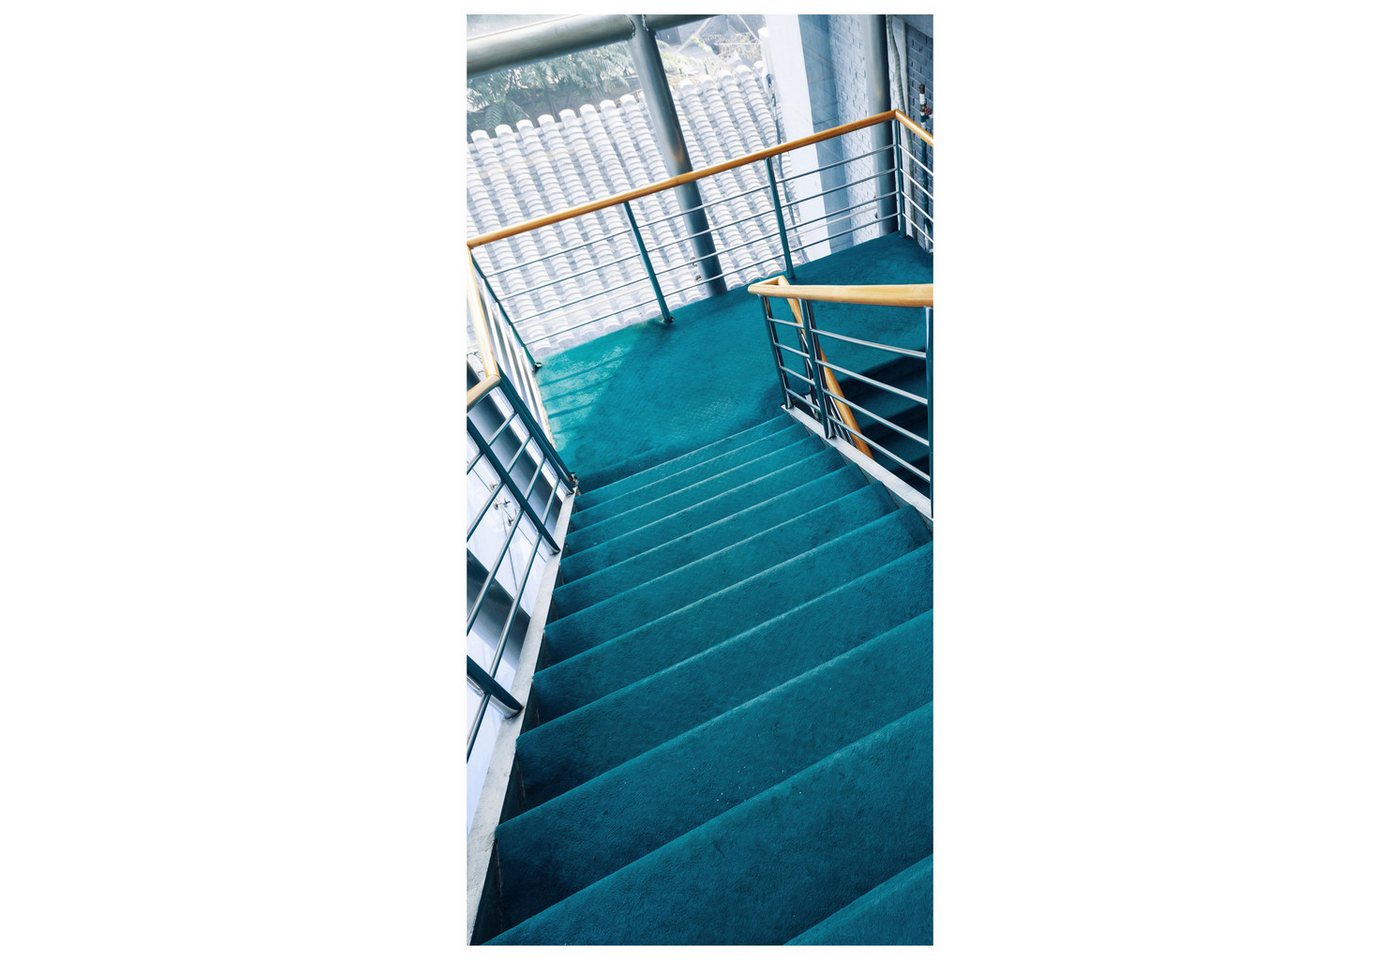 wandmotiv24 Türtapete Blick auf Treppe, Treppen-stufen, glatt, Fototapete, Wandtapete, Motivtapete, matt, selbstklebende Vliestapete von wandmotiv24